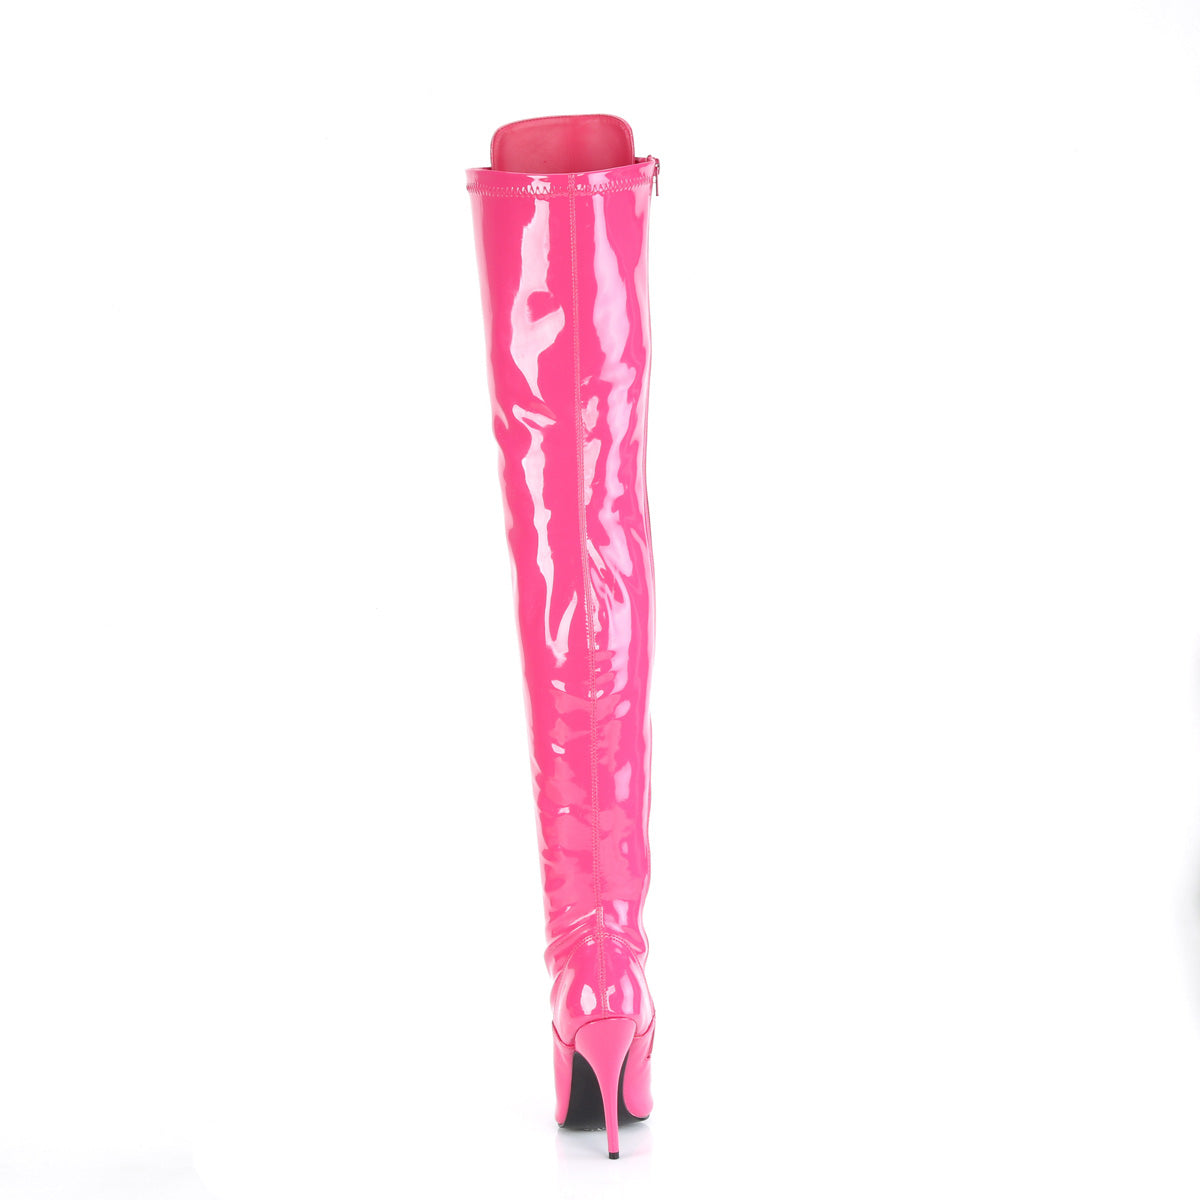 Pleaser Womens Boots SEDUCE-3024 H. Pink Pat